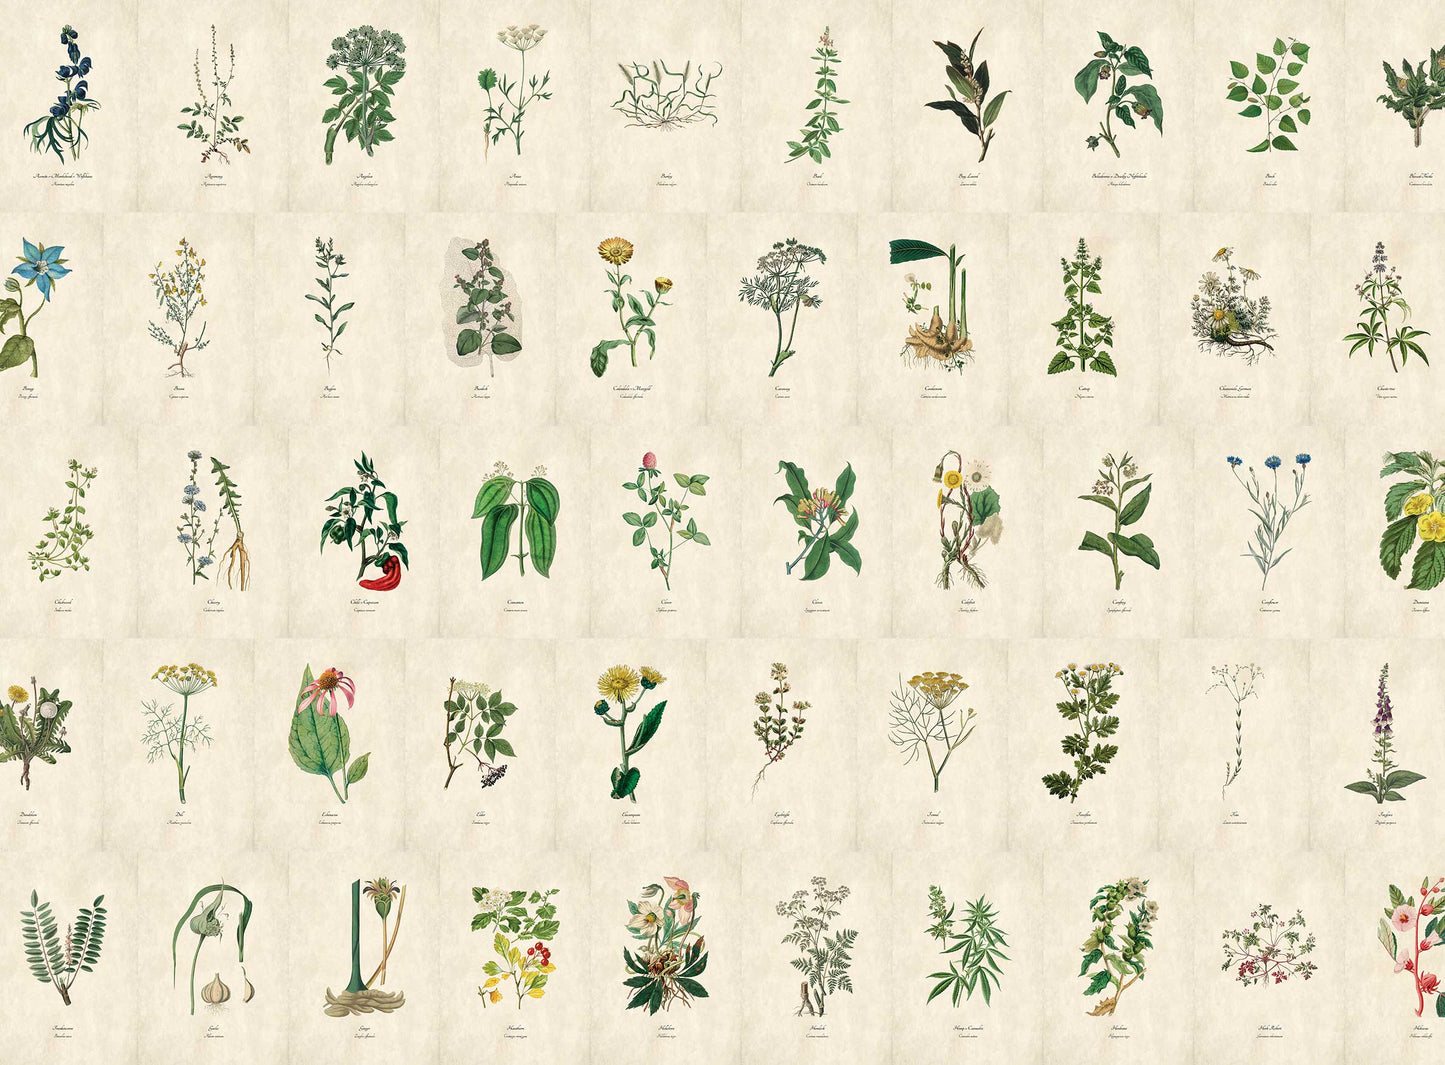 100 Antique Botanical Illustrations